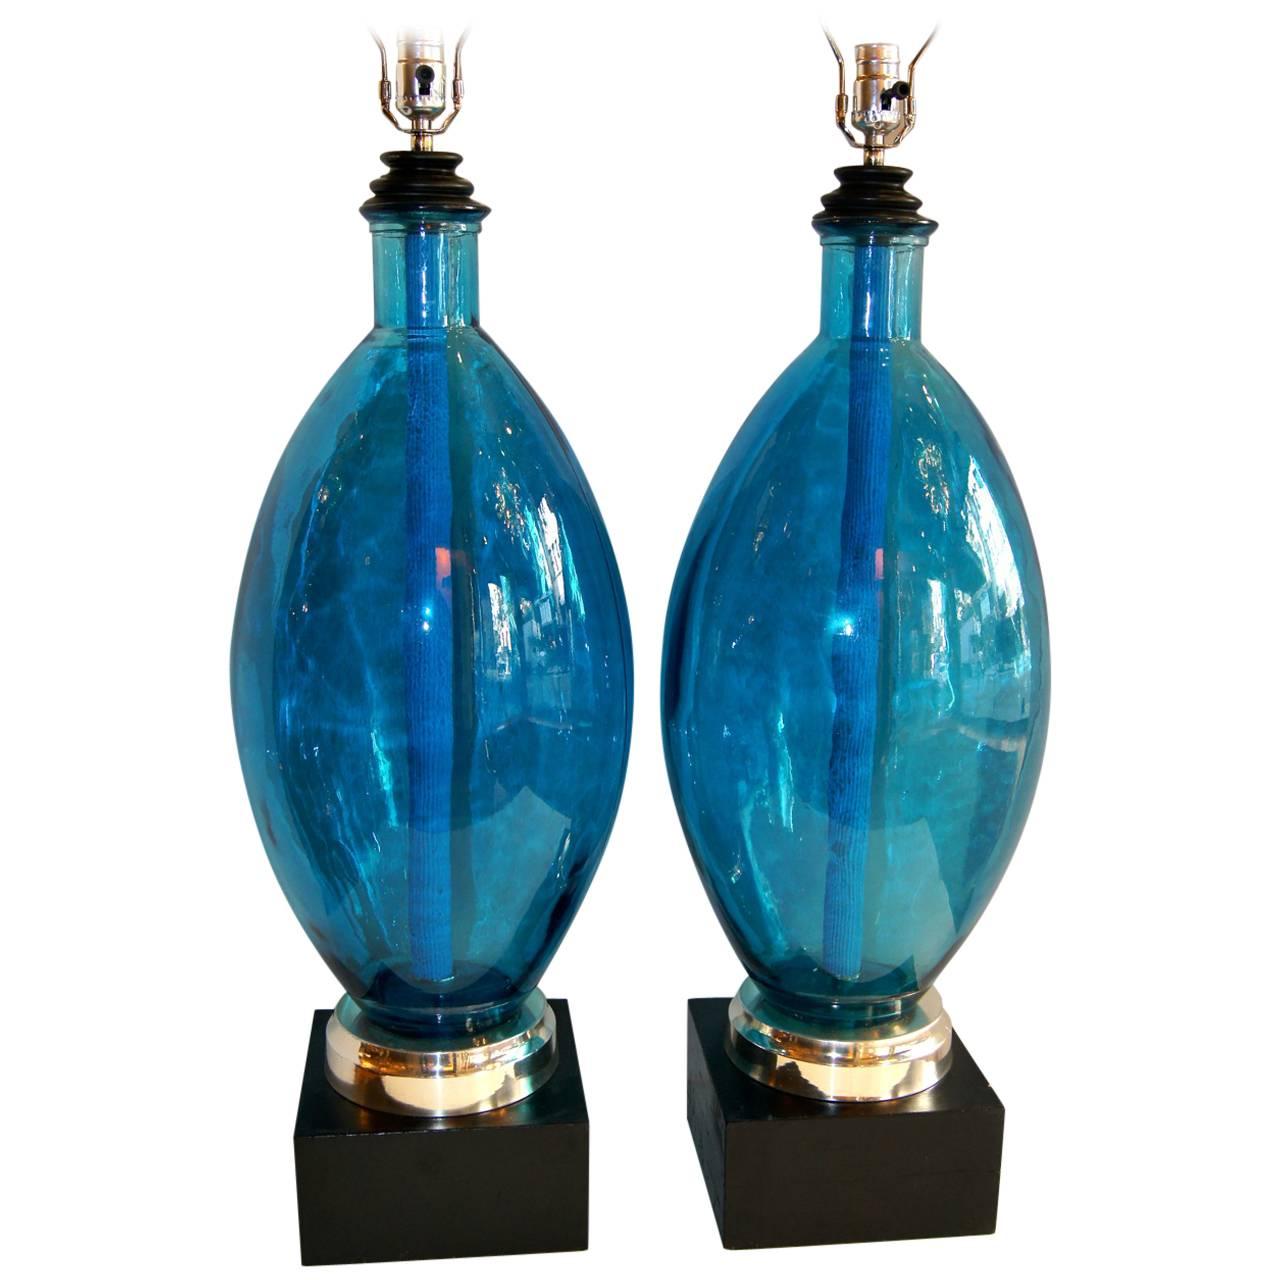 Großes Paar großer Vasen  Lampen aus blauem Glas